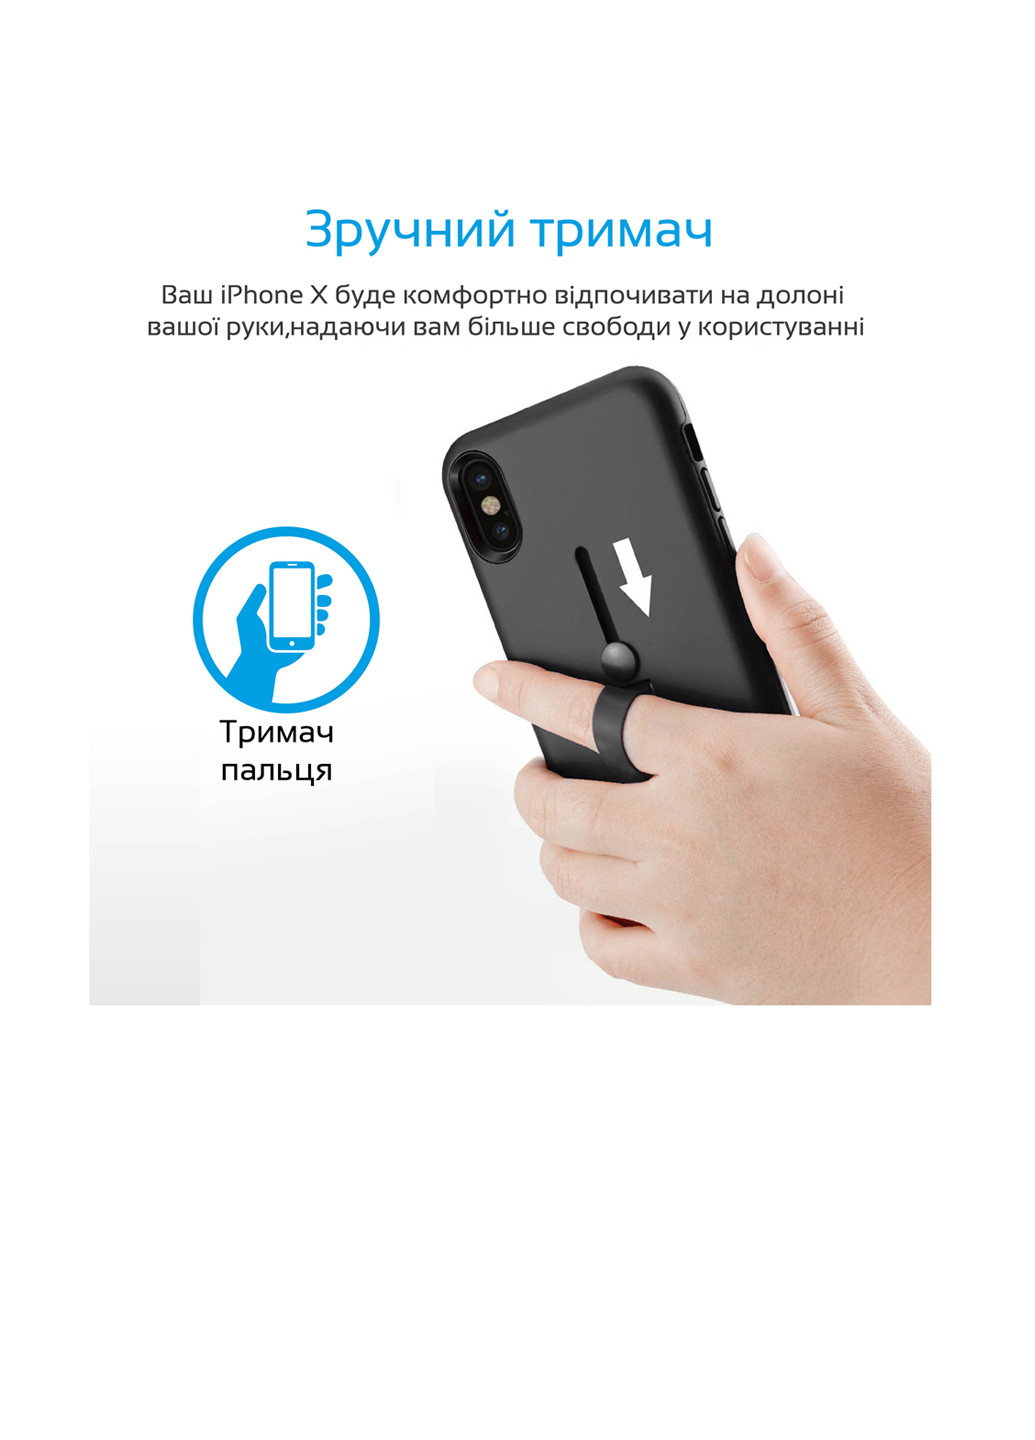 Чехол для iPhone Mountcase-X Black Promate iphone x (136919737)